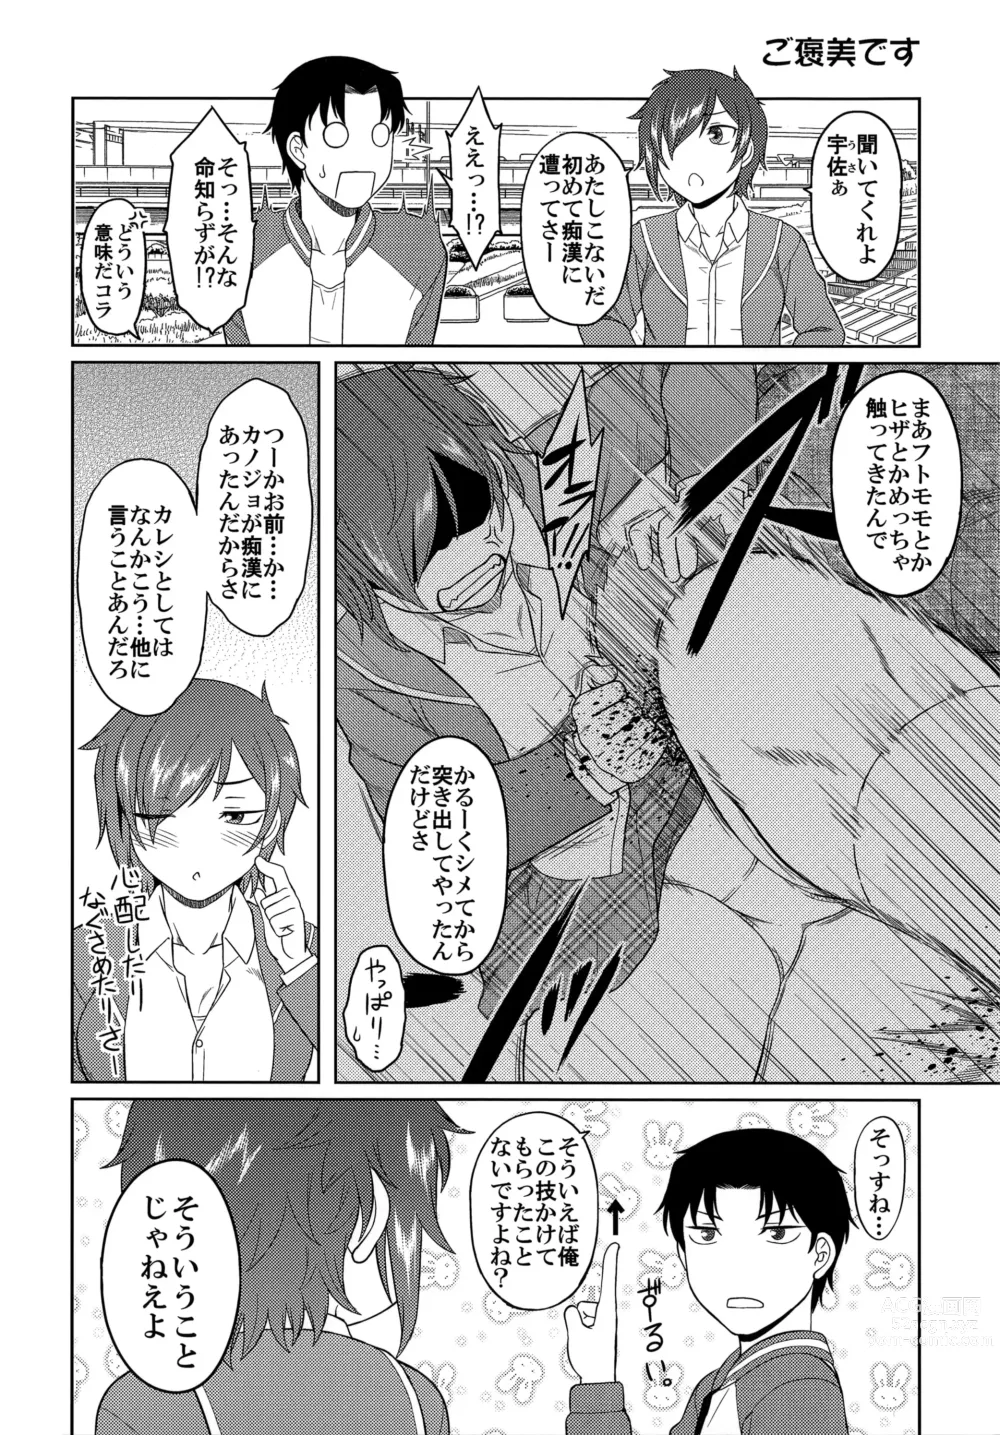 Page 3 of manga Hatsukoi Splash! Toranoana Kounyu Tokuten 4P Leaflet